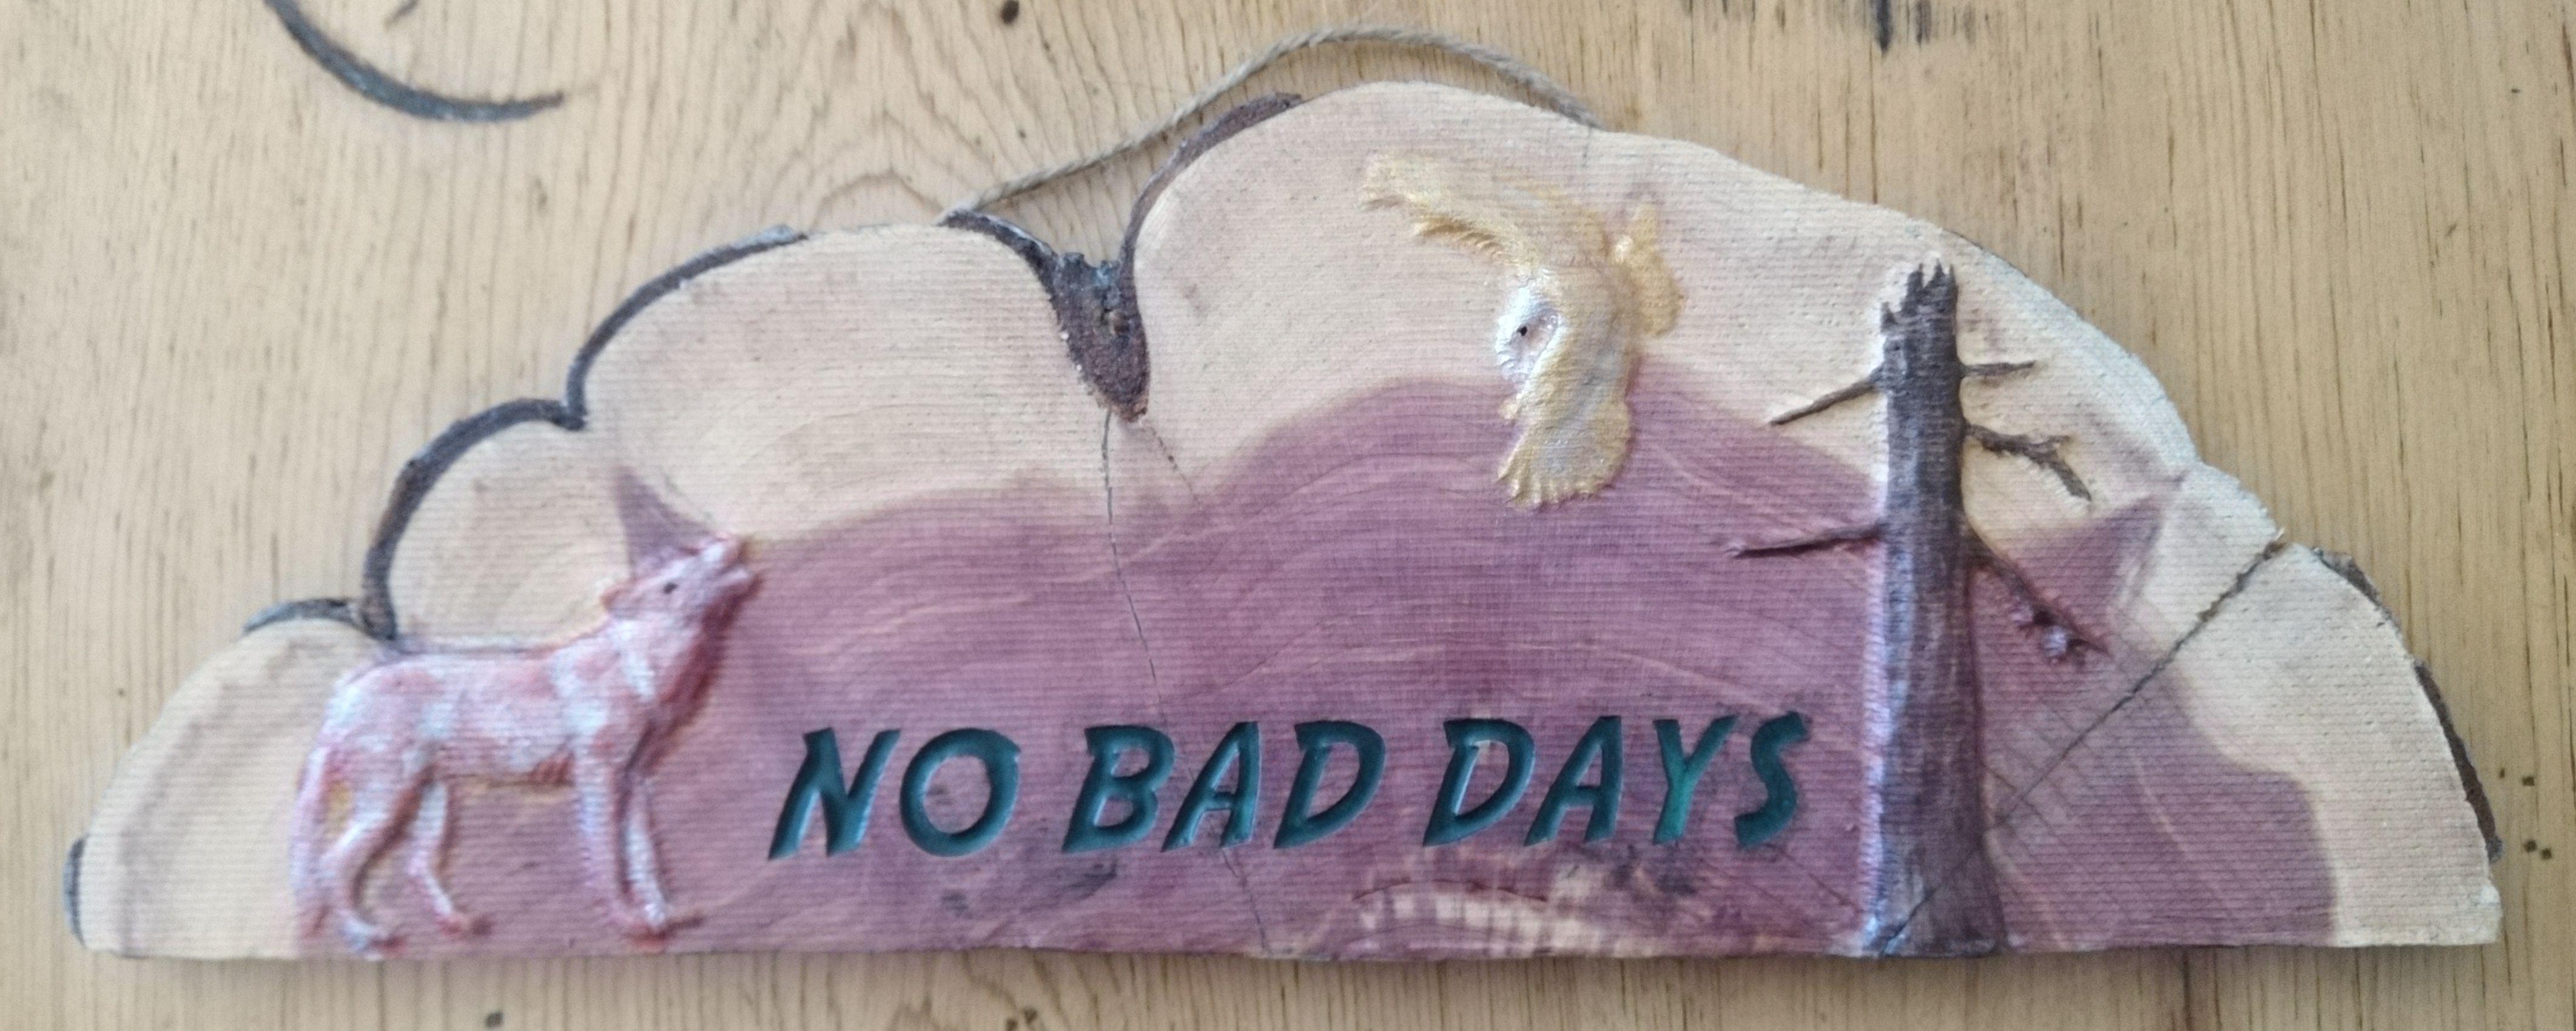 2. "No Bad Days" palm tree tattoo - wide 7